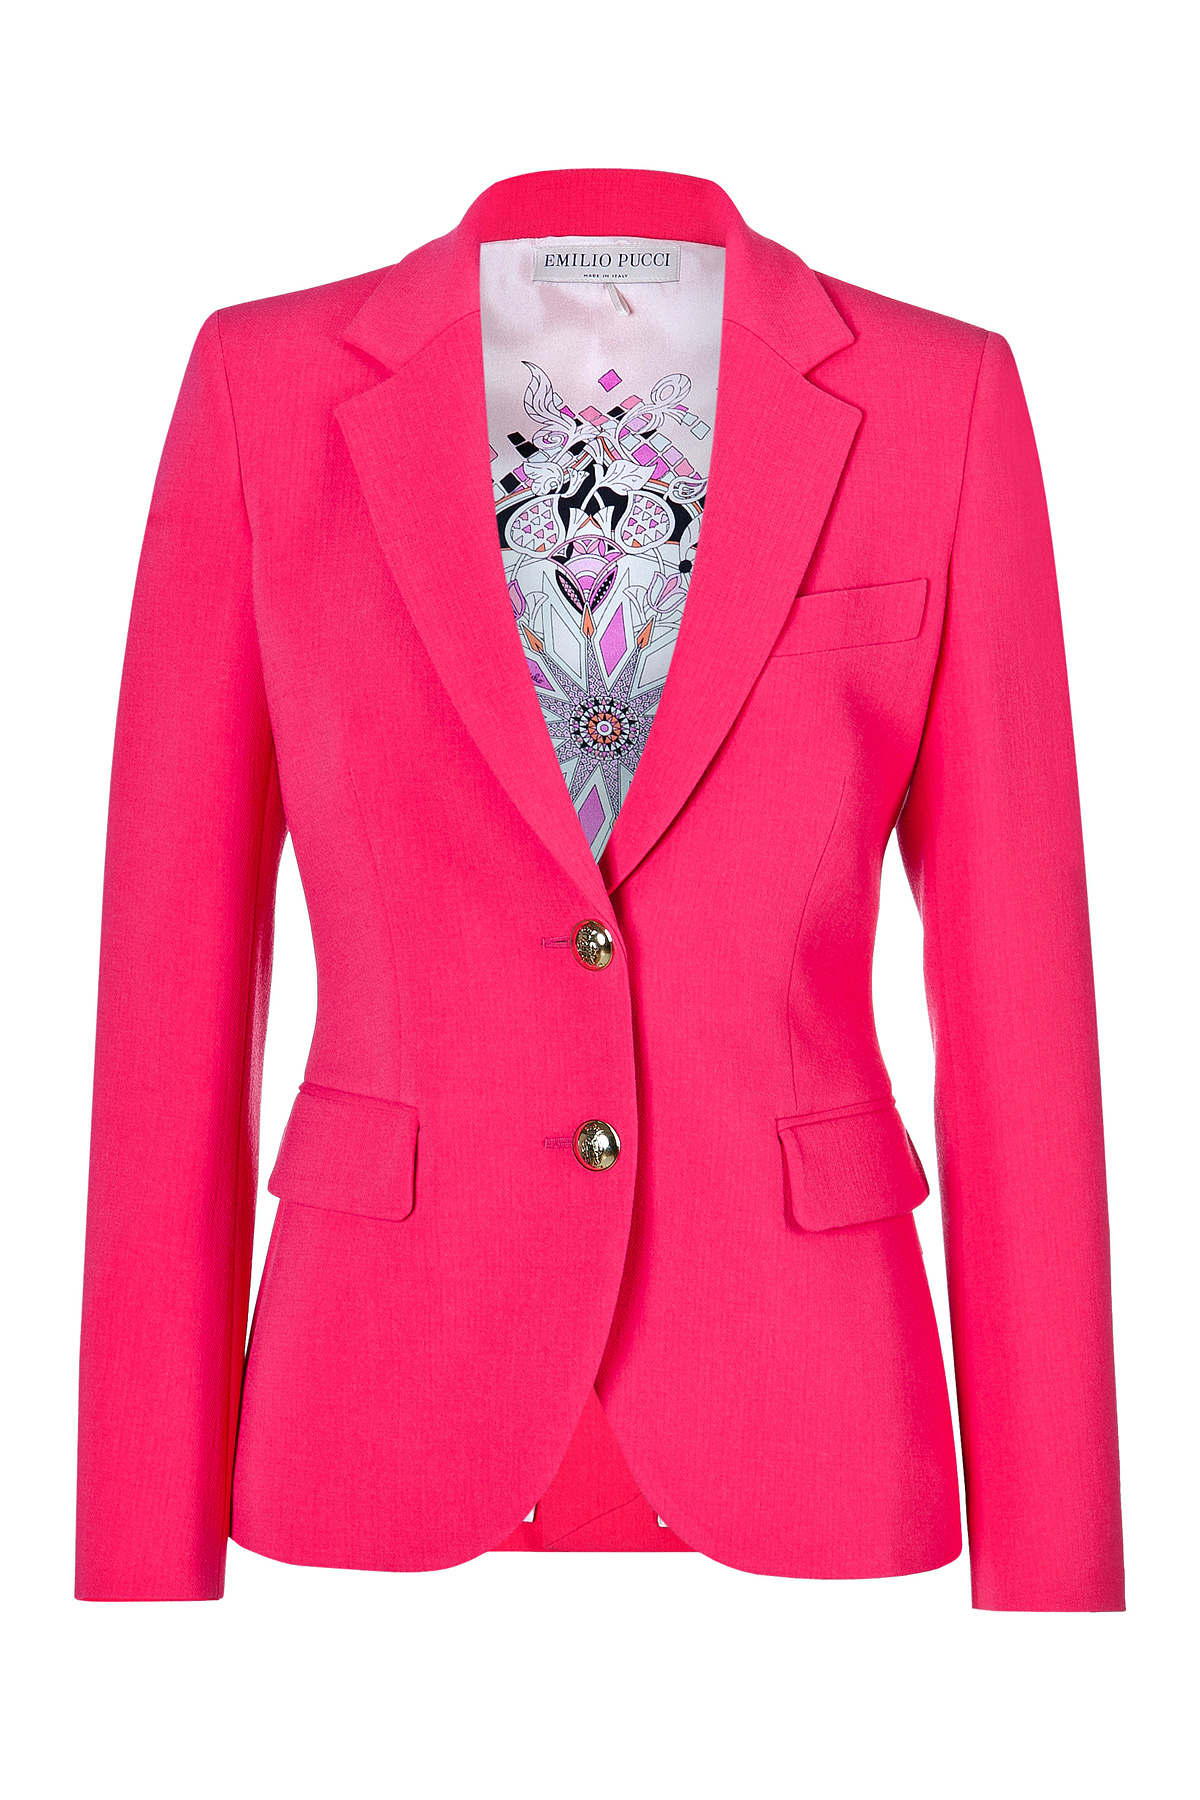 Lyst - Emilio Pucci Wool Blazer in Pink